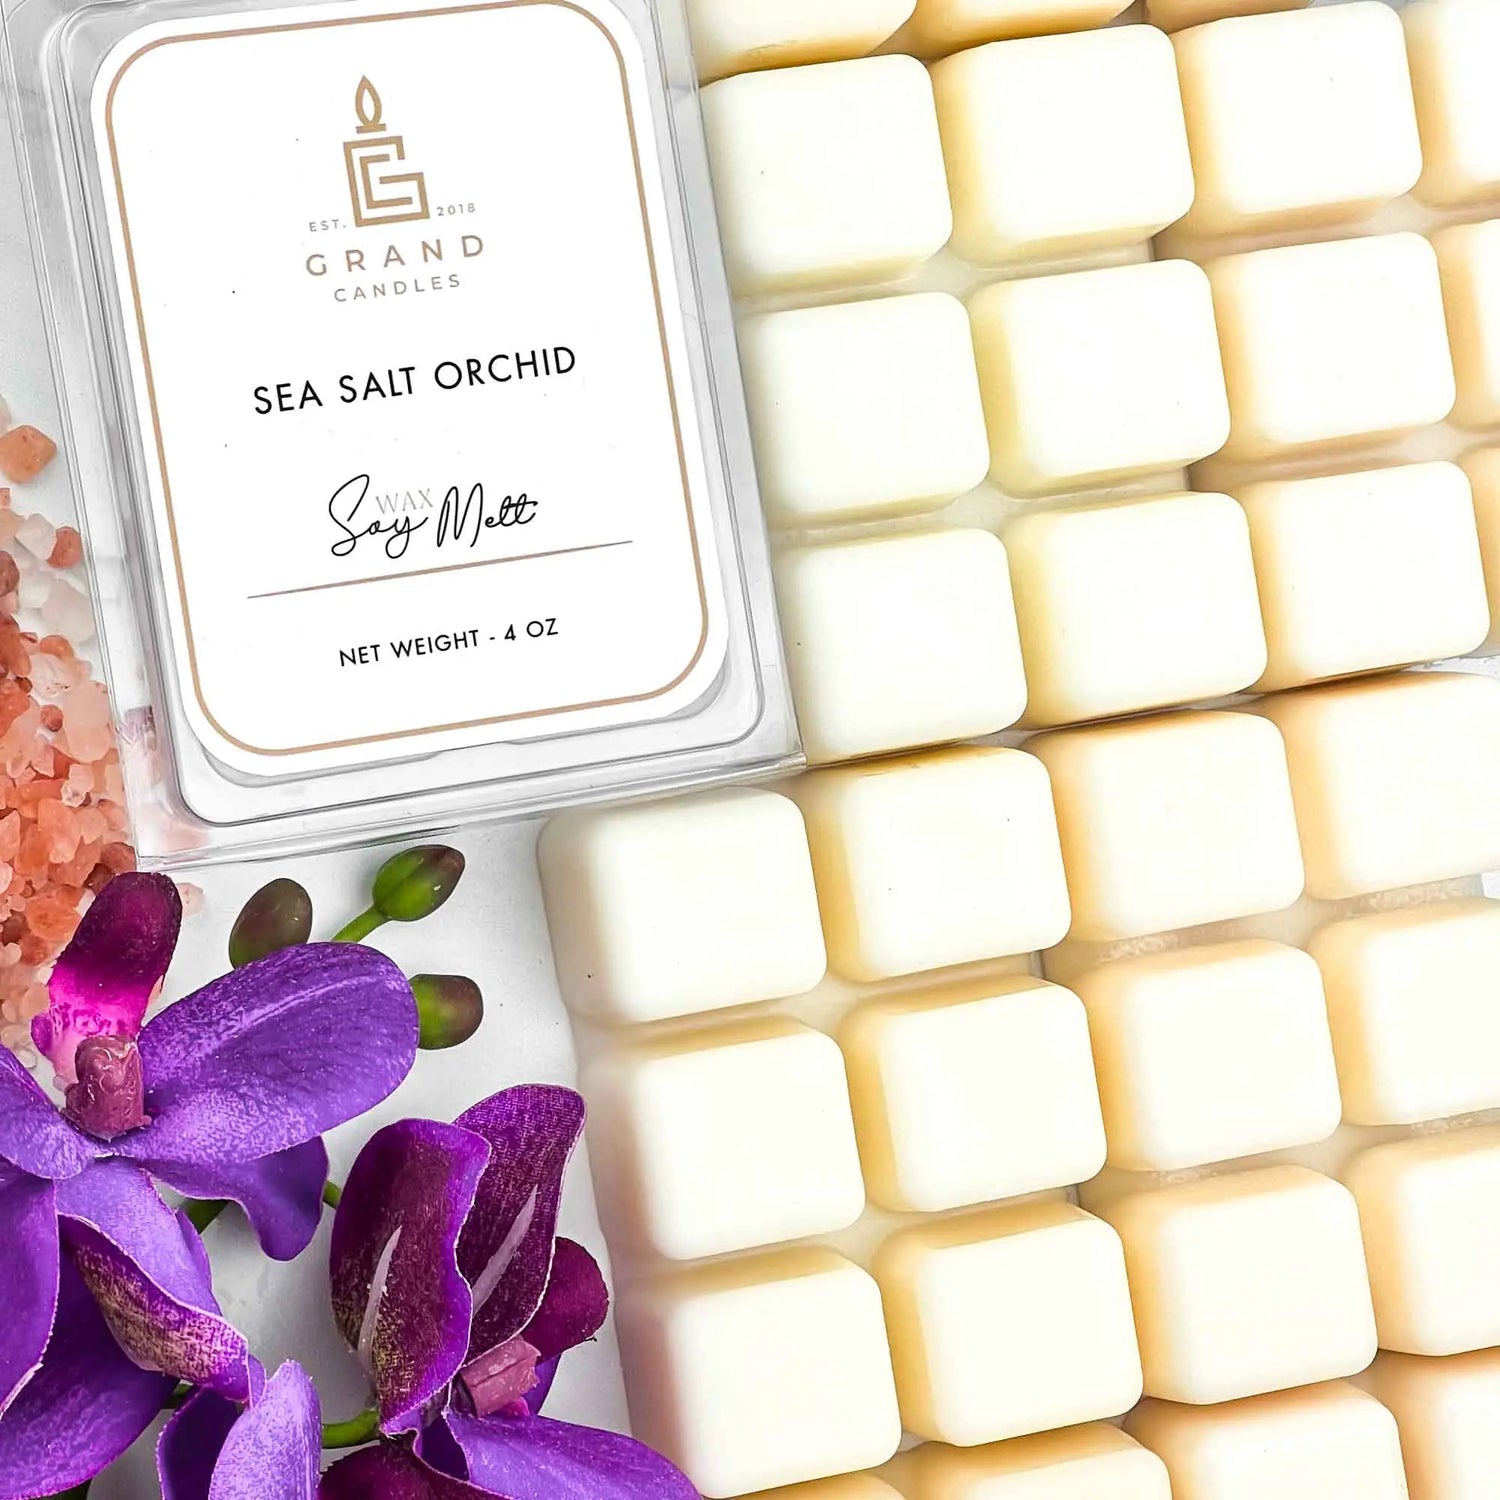 Sea Salt Orchid Wax Melt Grand Candles LLC